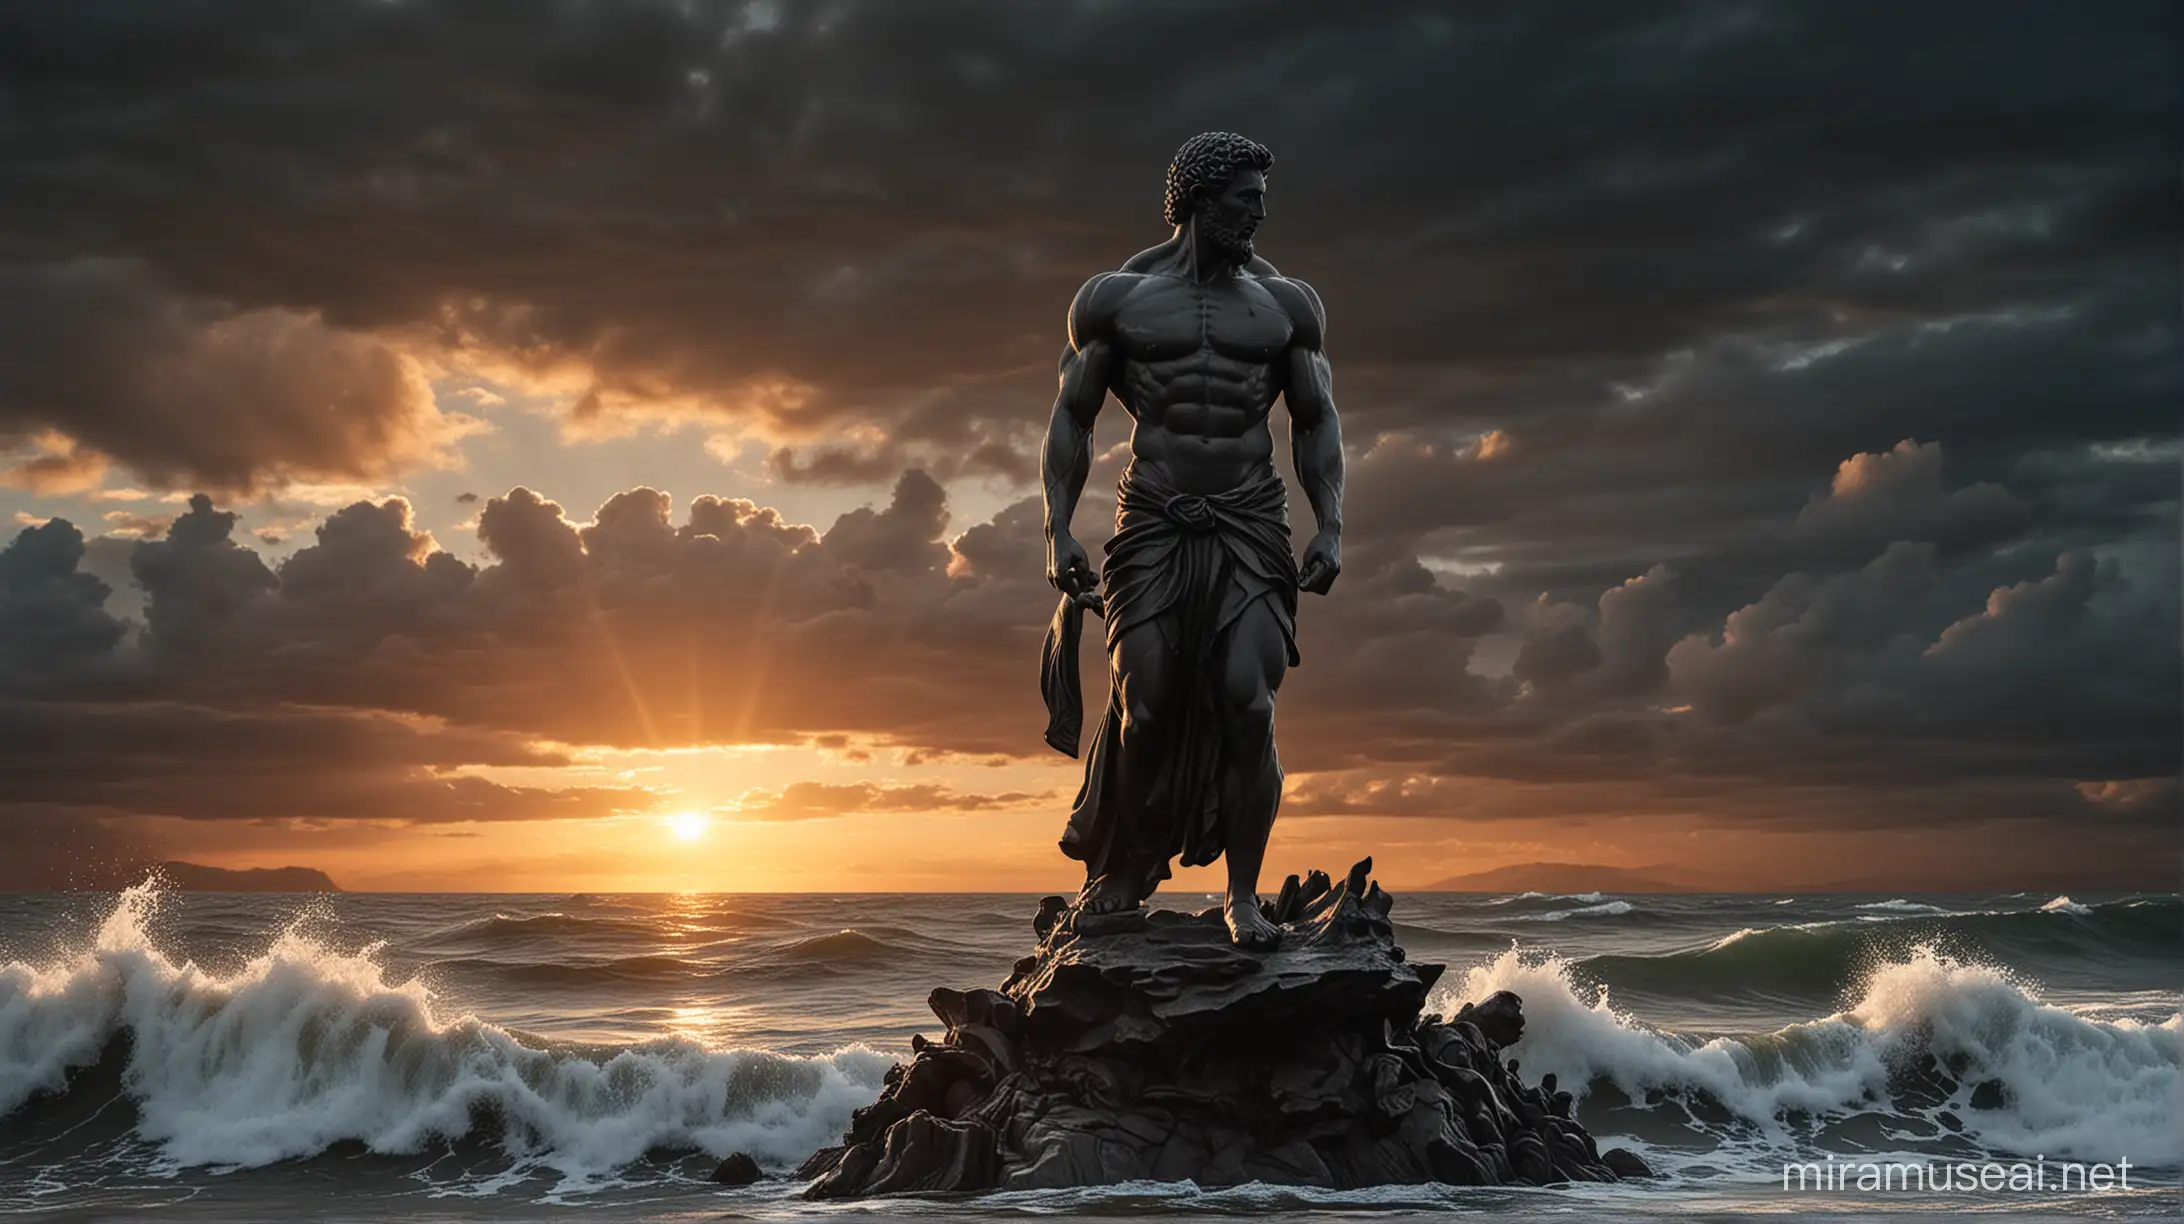 Stoic Muscular Statue Facing Dark Sunset with Approaching Tsunami